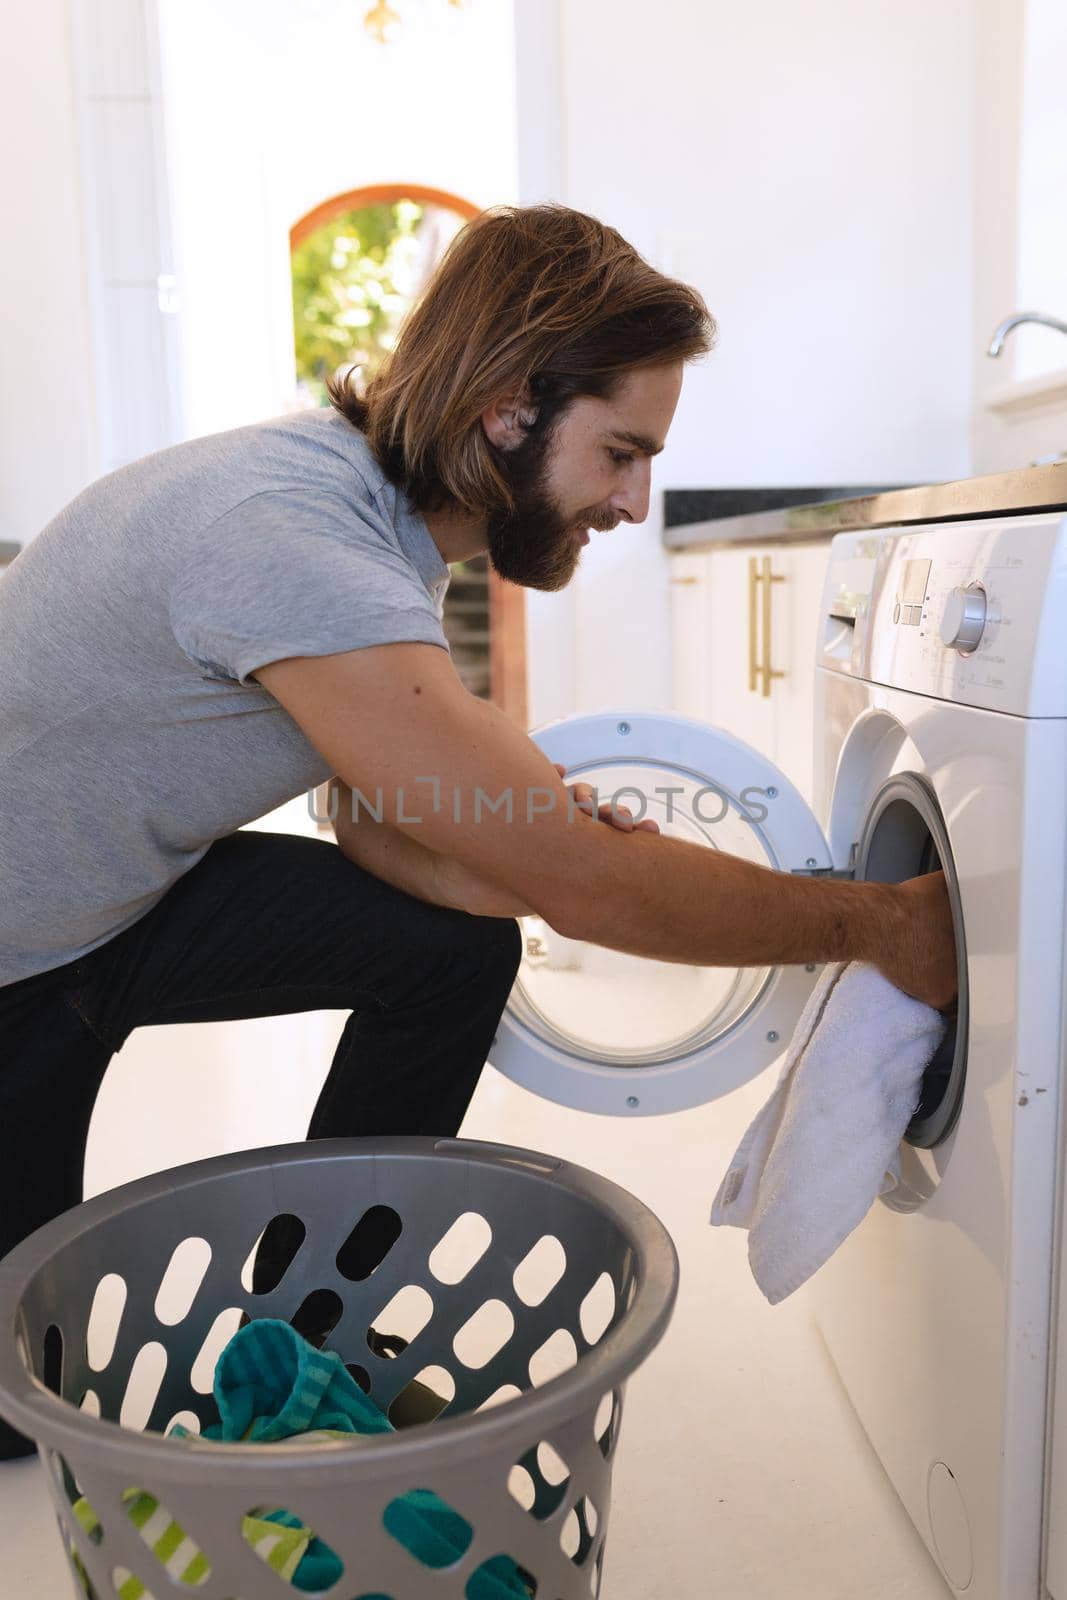 Caucasian man wearing gray tshirt and doing laundry by Wavebreakmedia